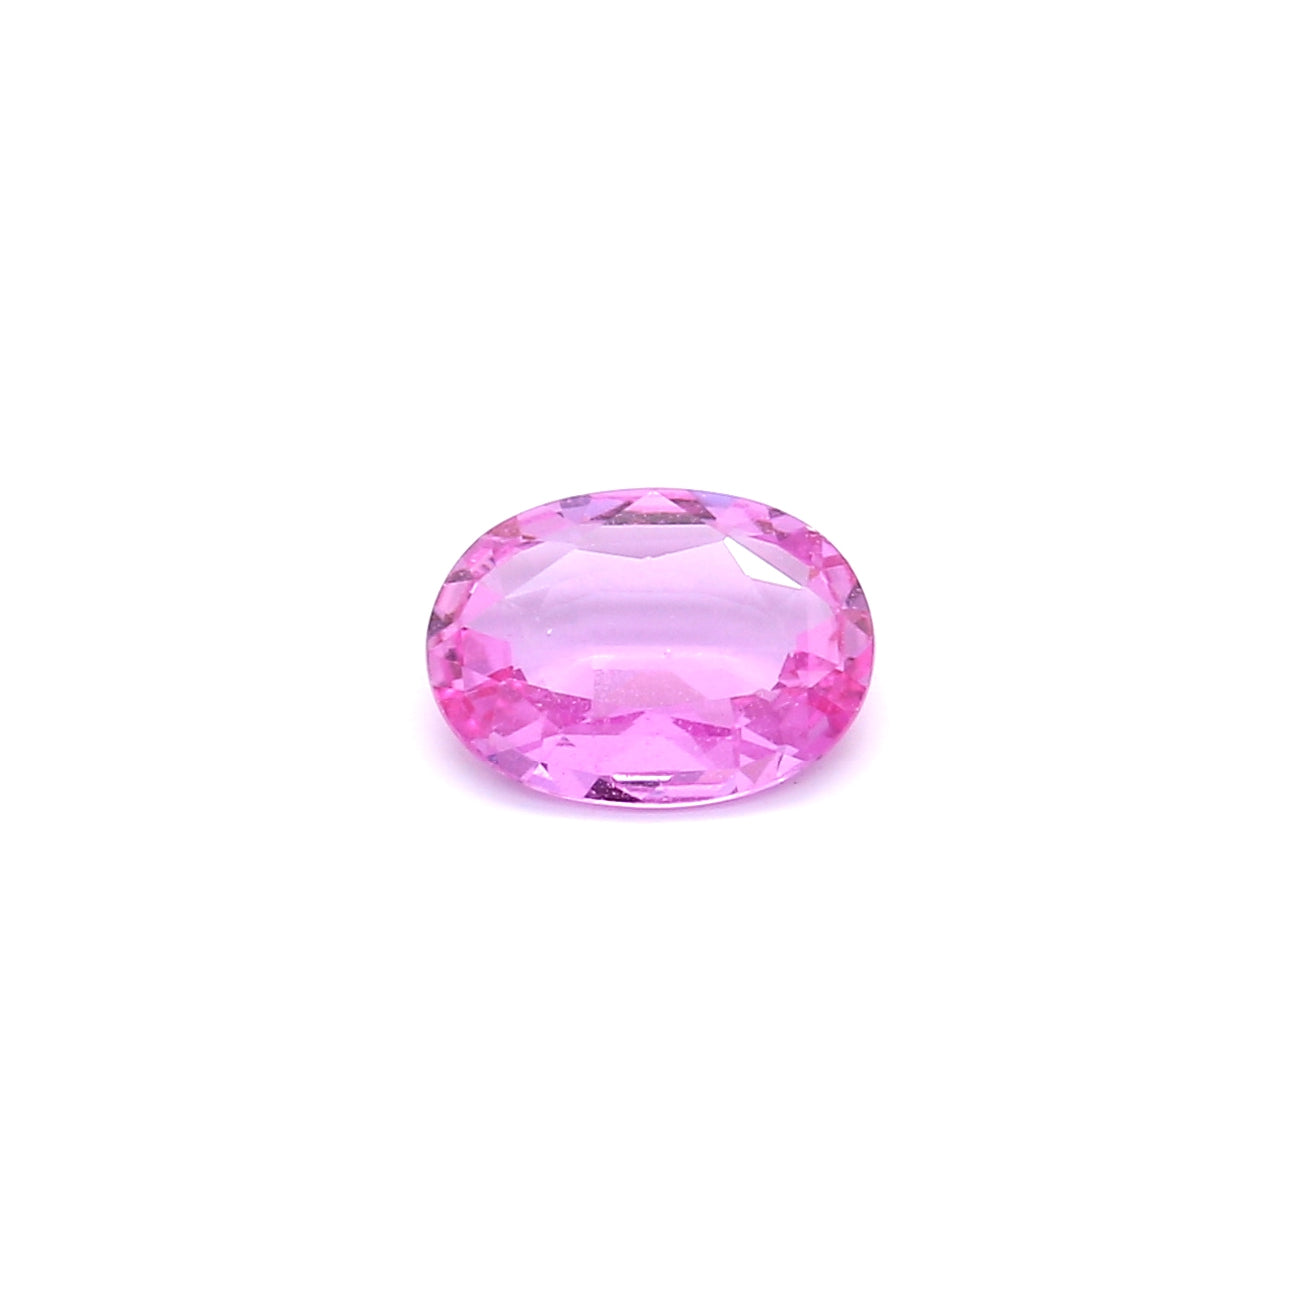 1.11ct Purplish Pink, Oval Sapphire, Heated, Madagascar - 7.91 x 5.87 x 2.44mm